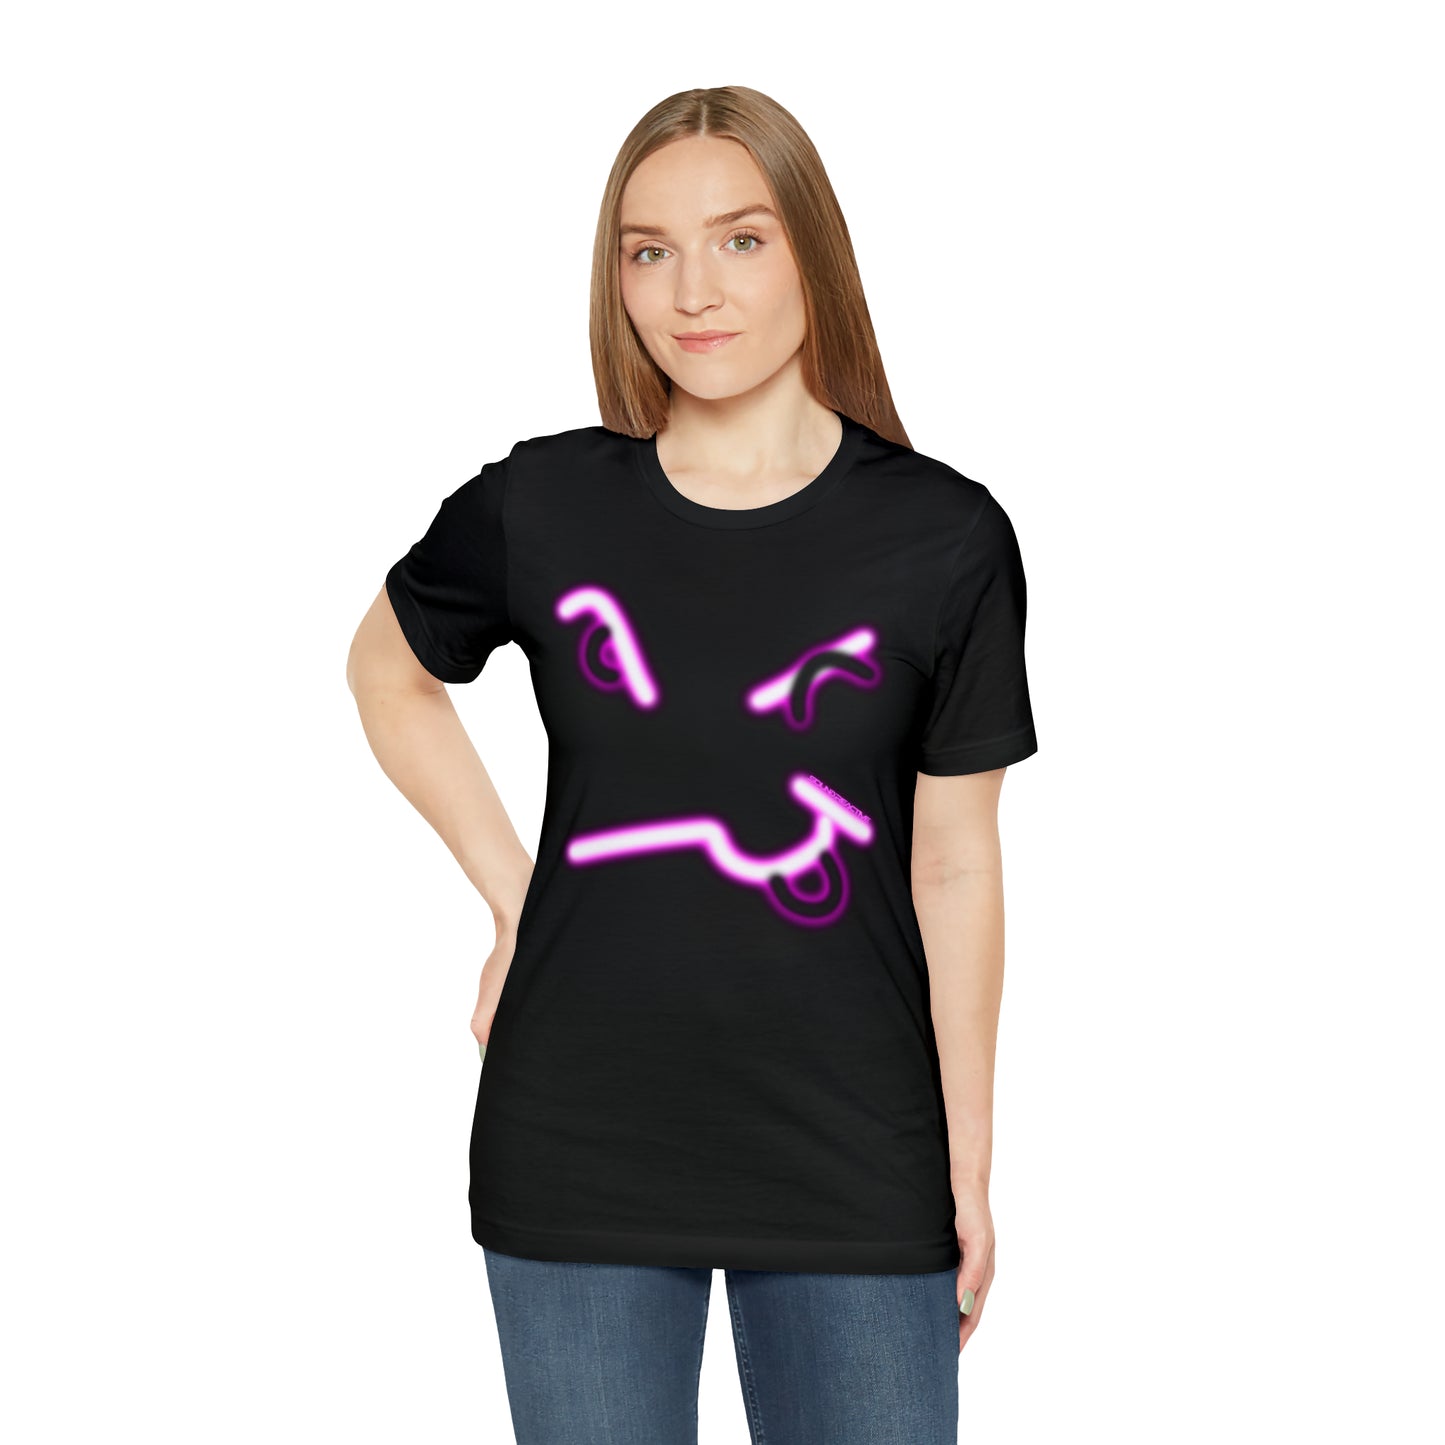 HUBOPTIC® Original Sound Reactive SMILEY V2 Electro Graphic T-shirt